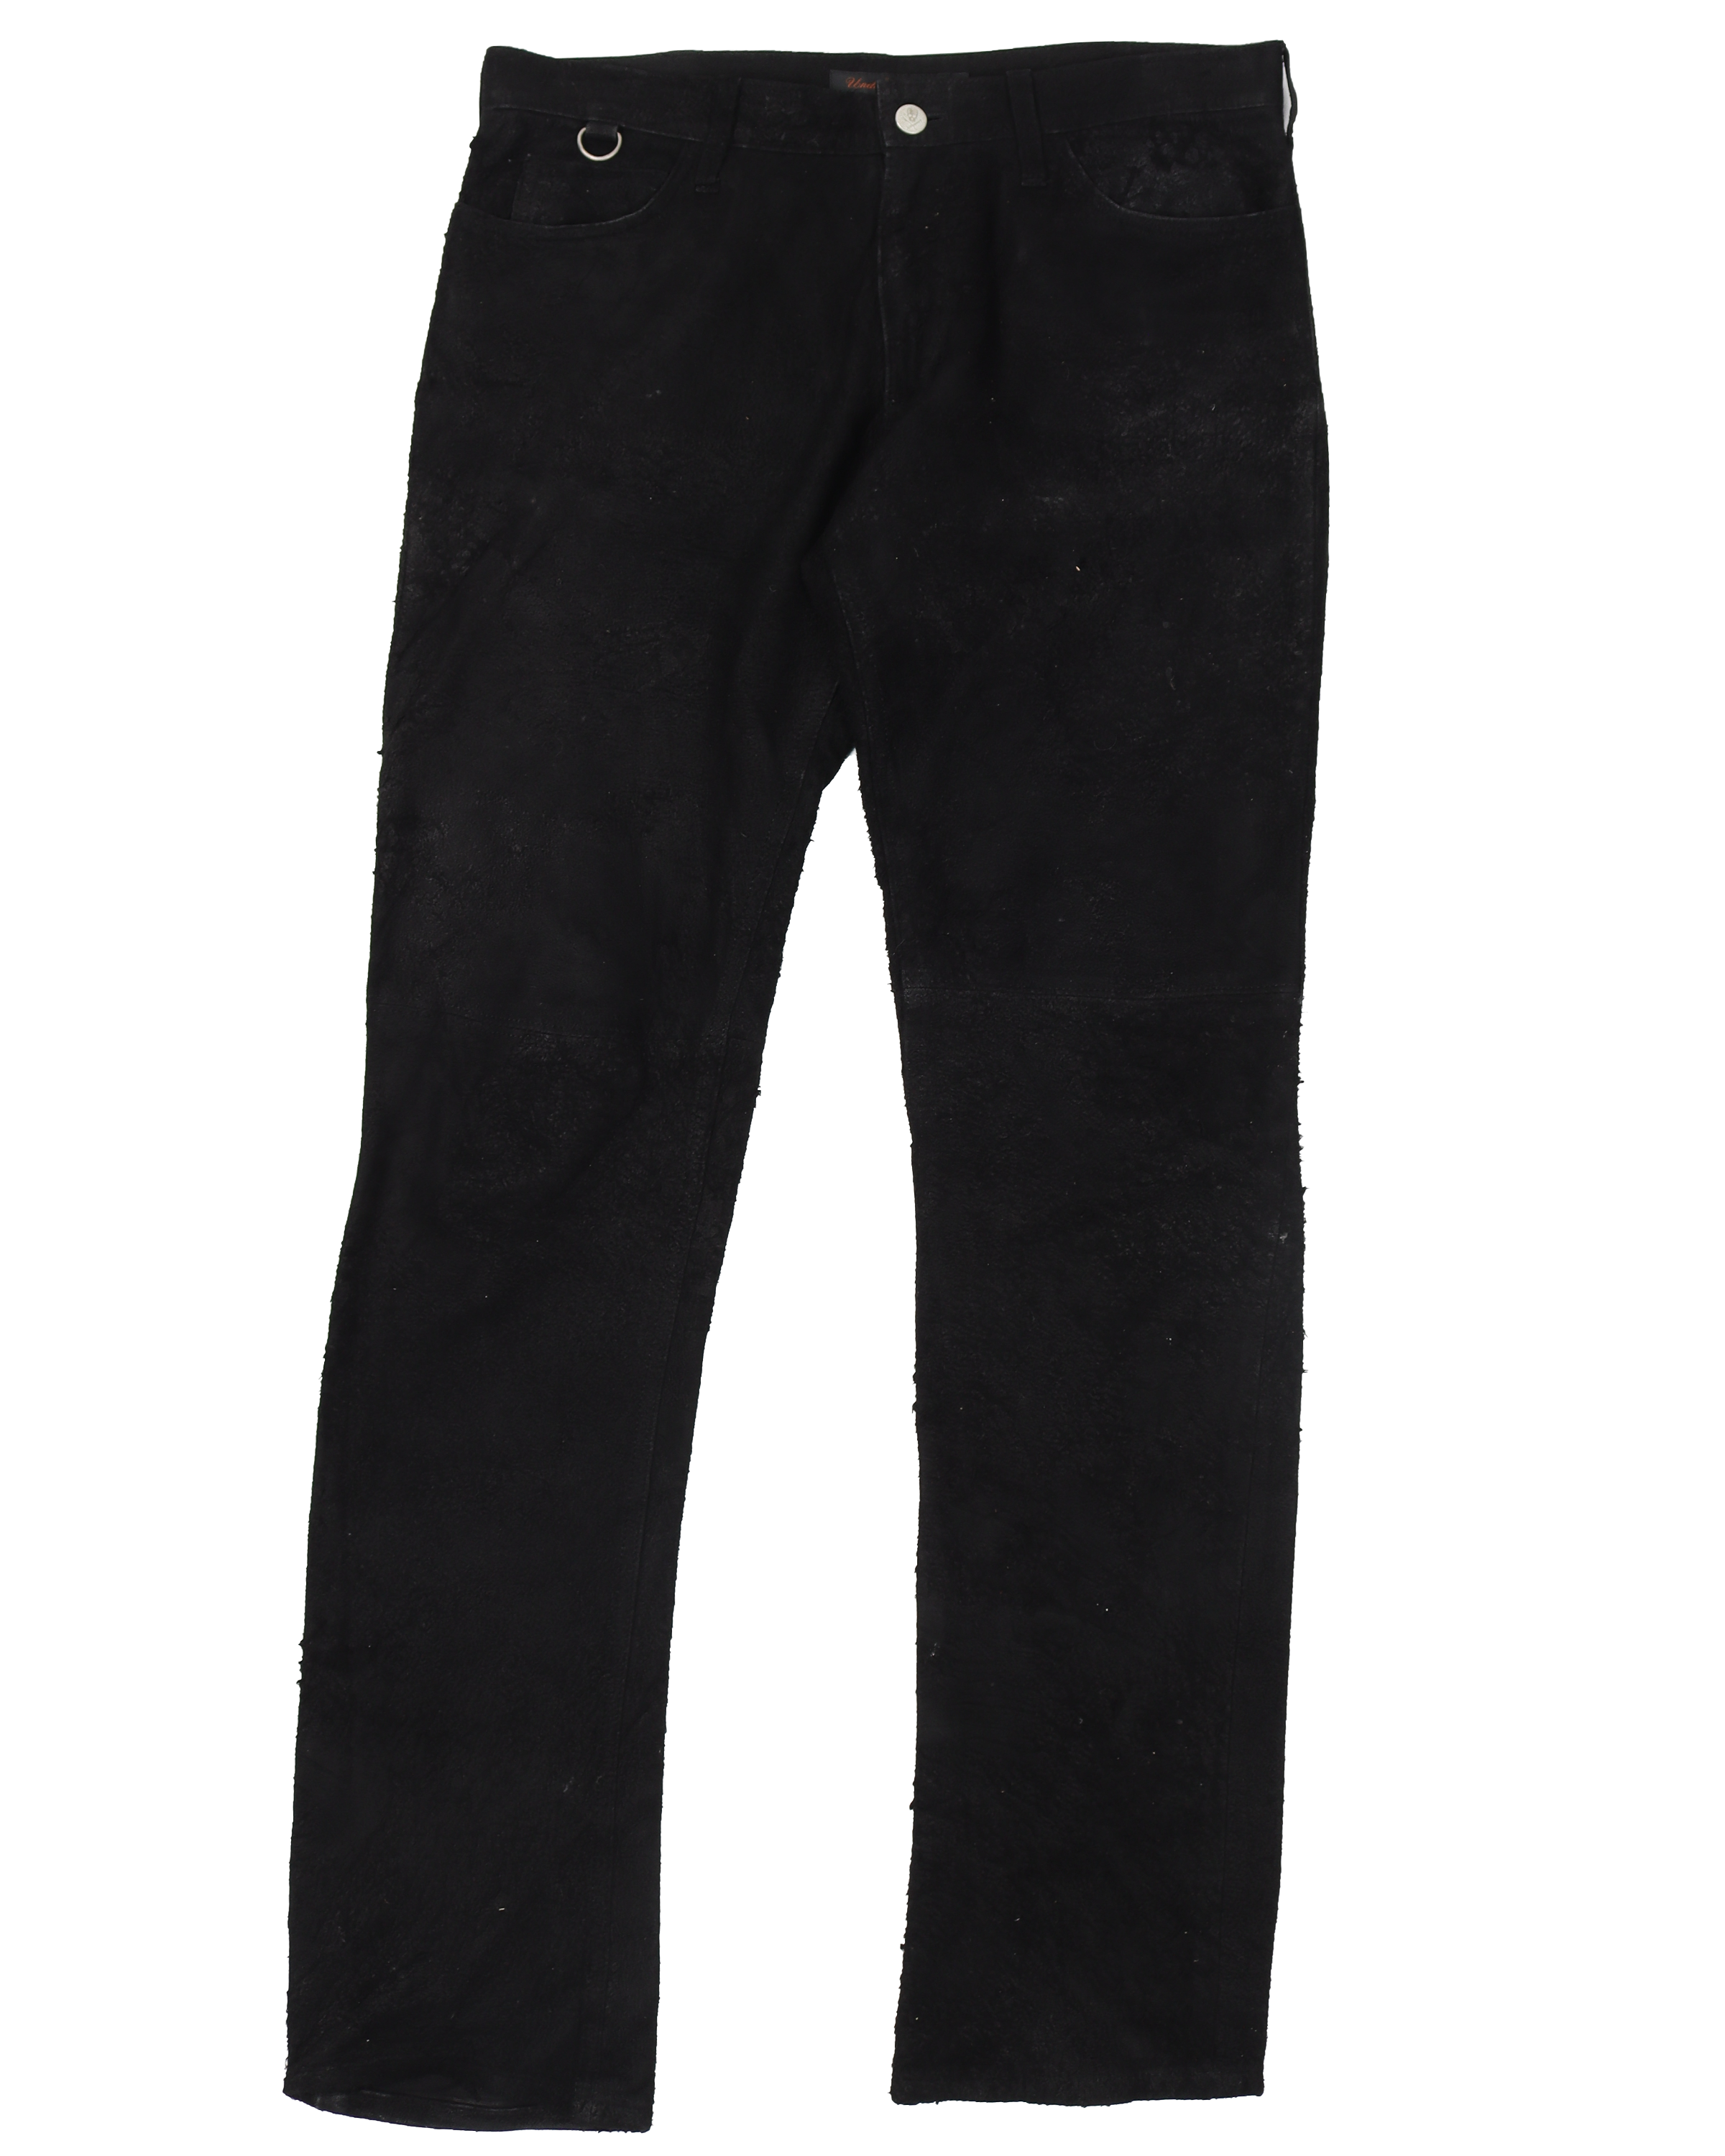 FW04 Blistered Lambskin pants “But Beautiful"